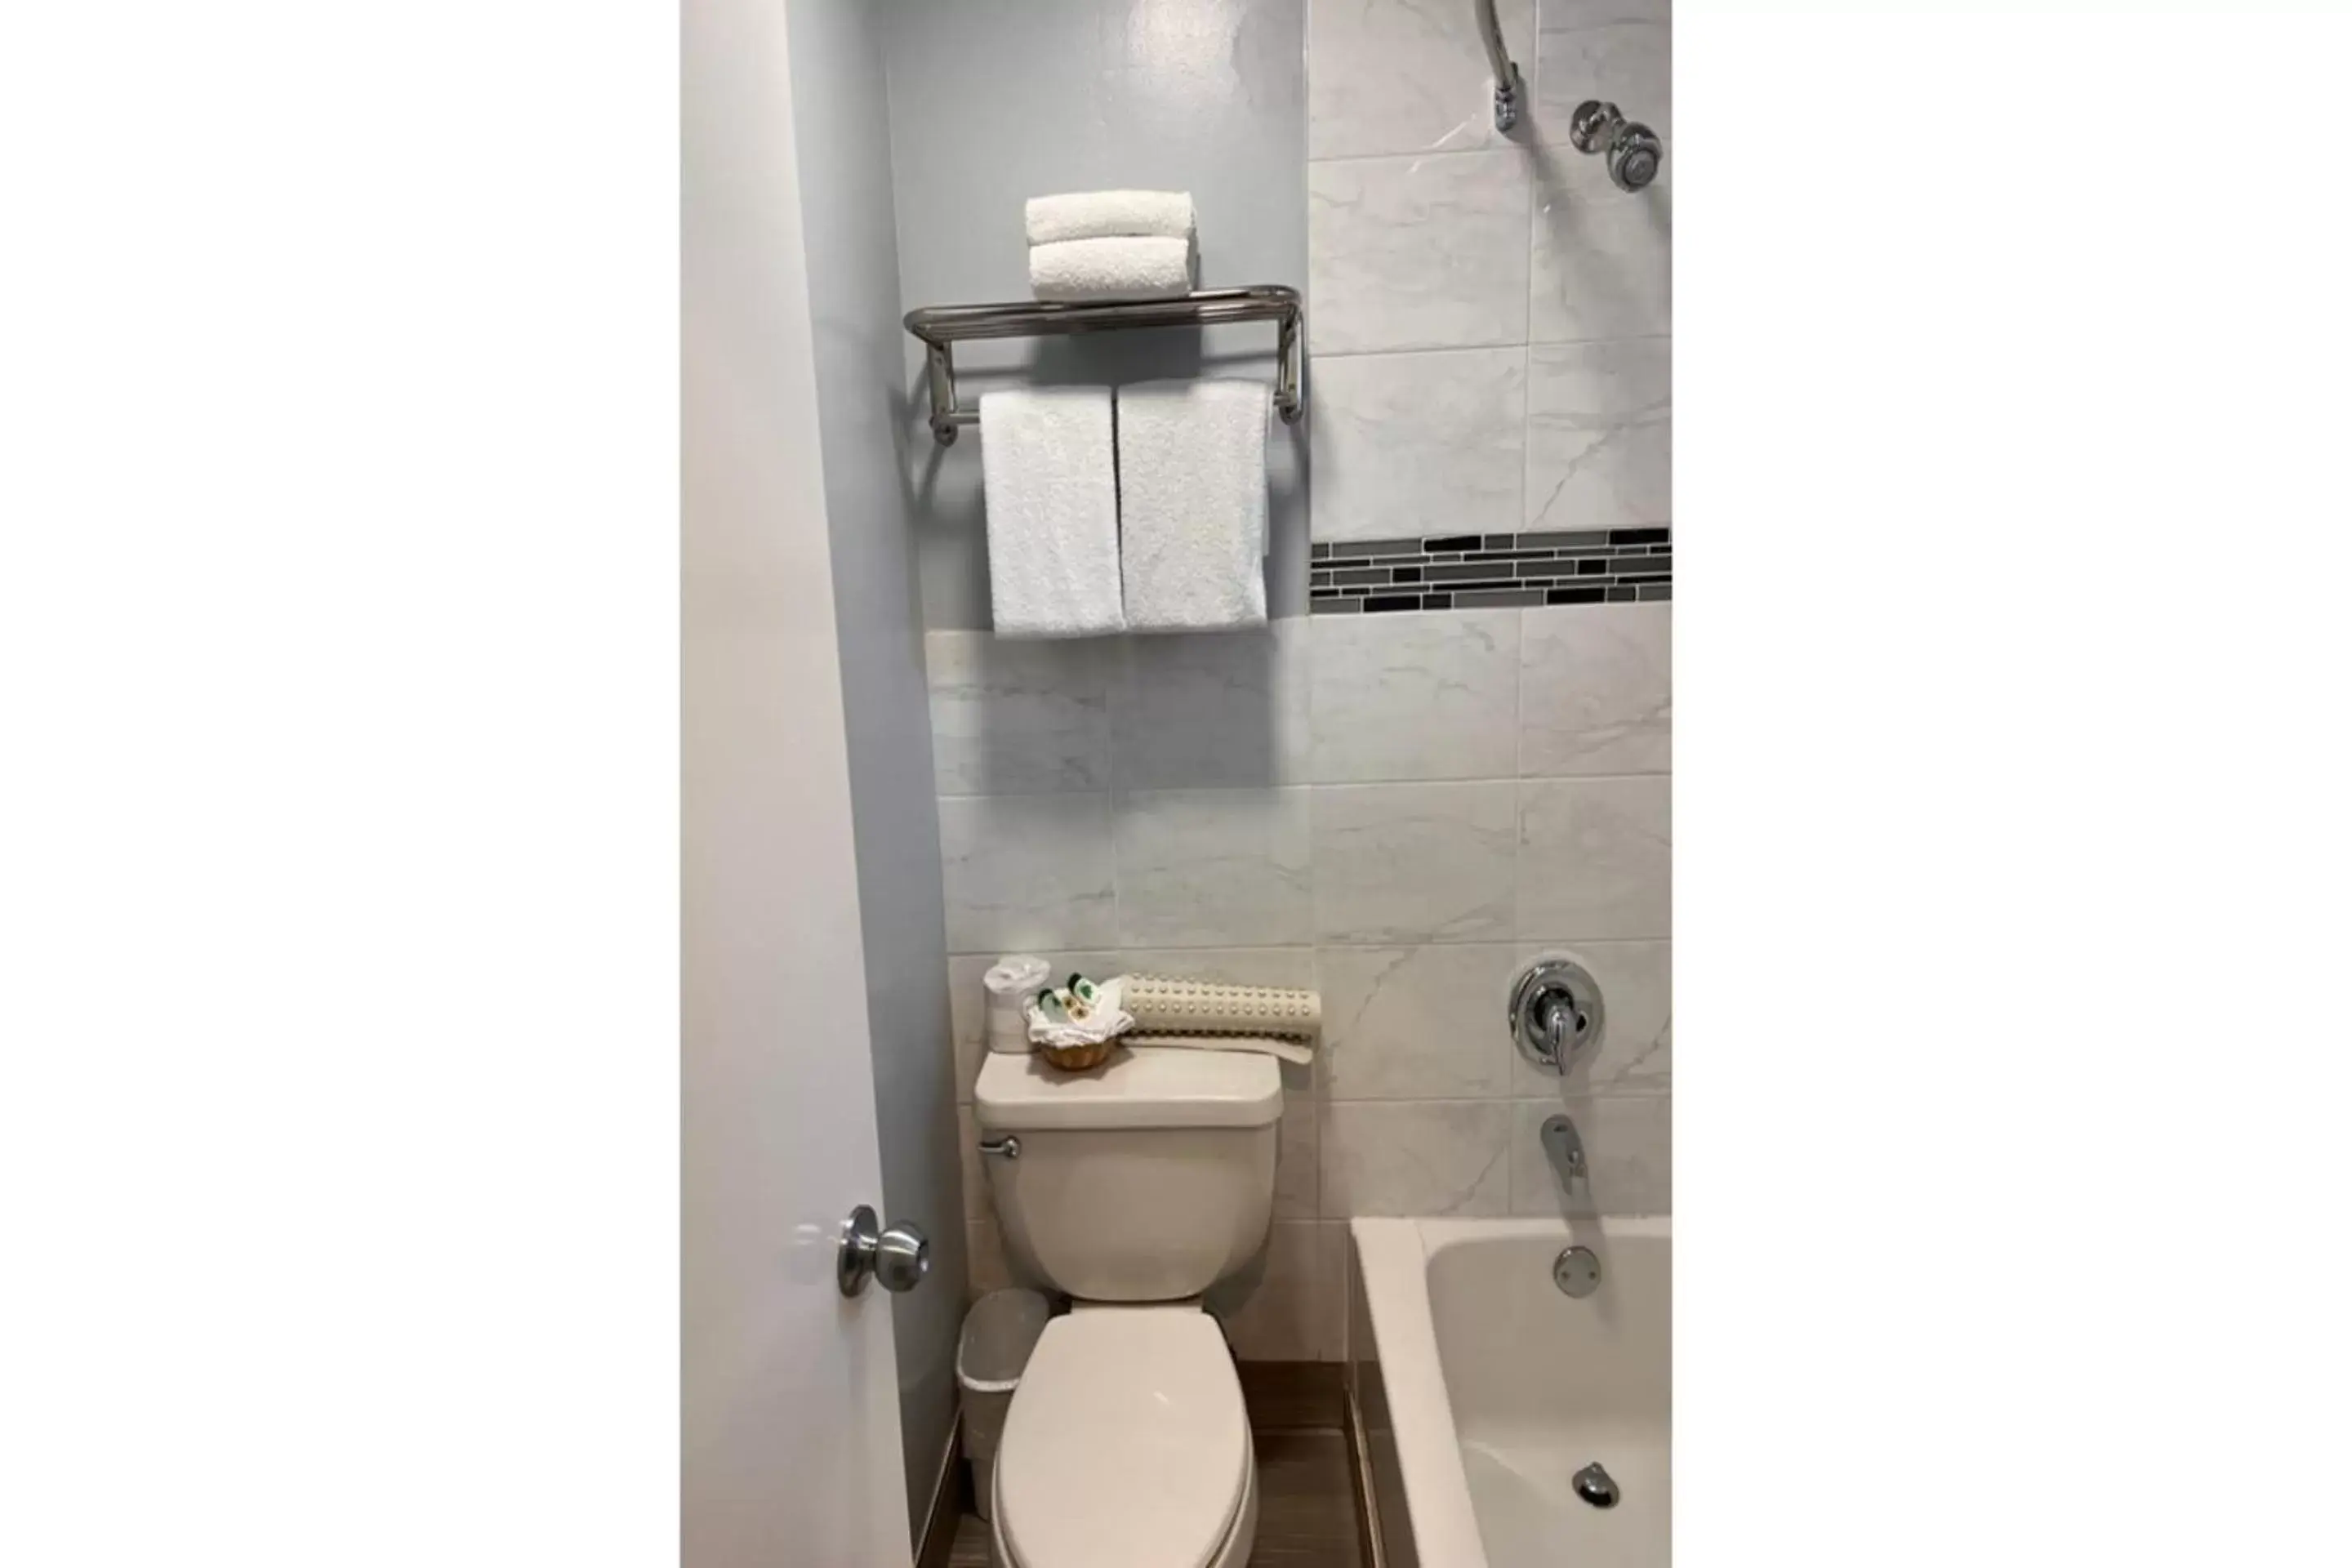 Bathroom in The Islander Motel Santa Cruz